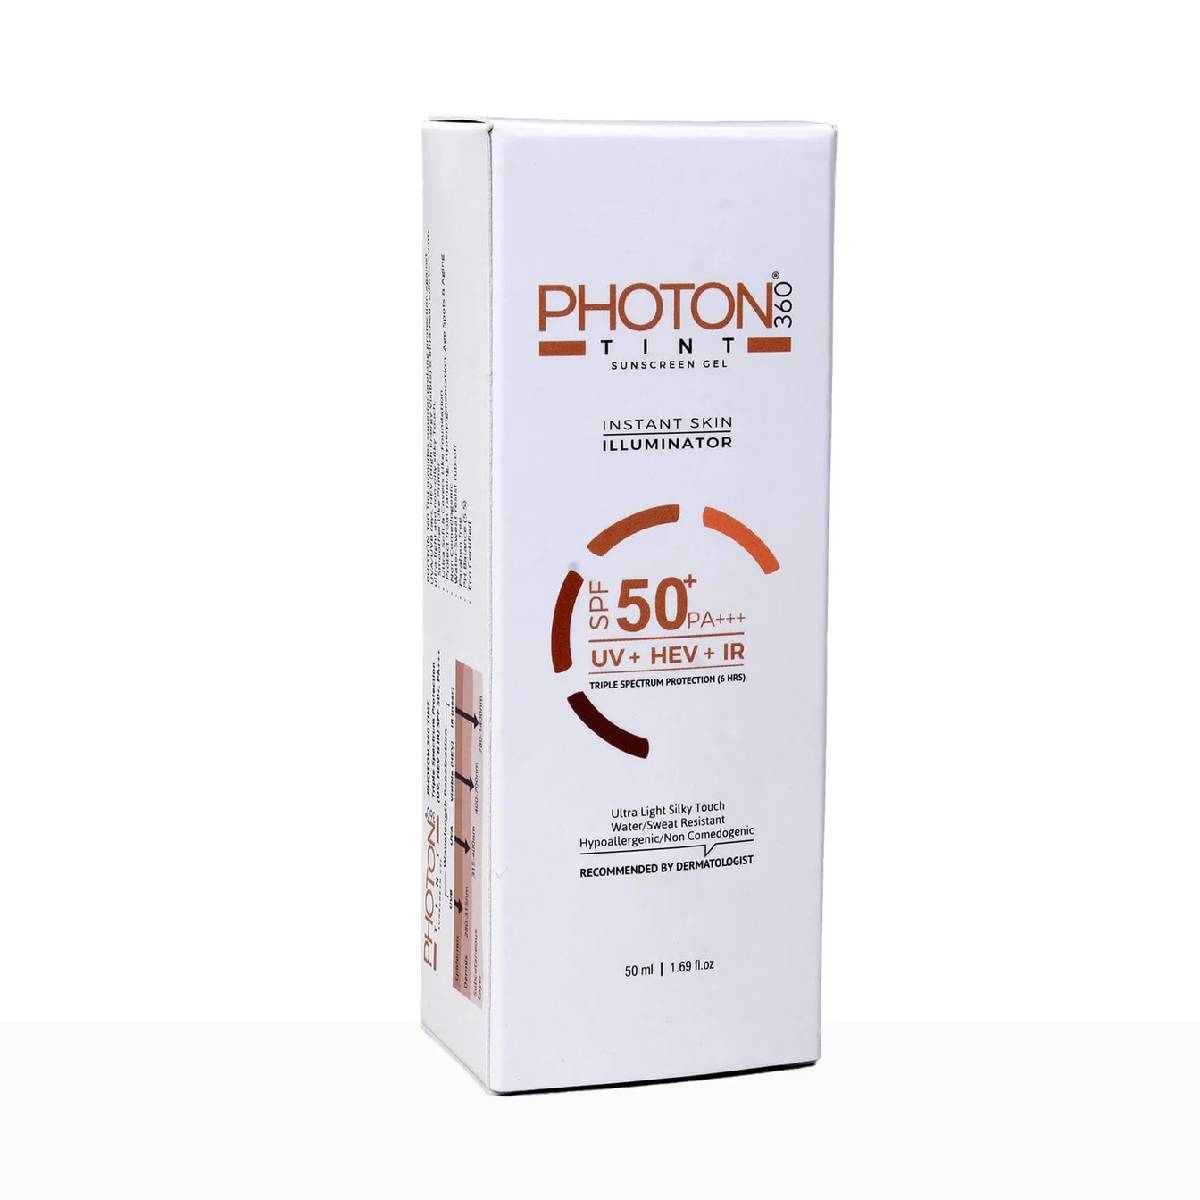 Aclaris Photon Tint 360 Sunscreen Gel SPF 50+ PA+++